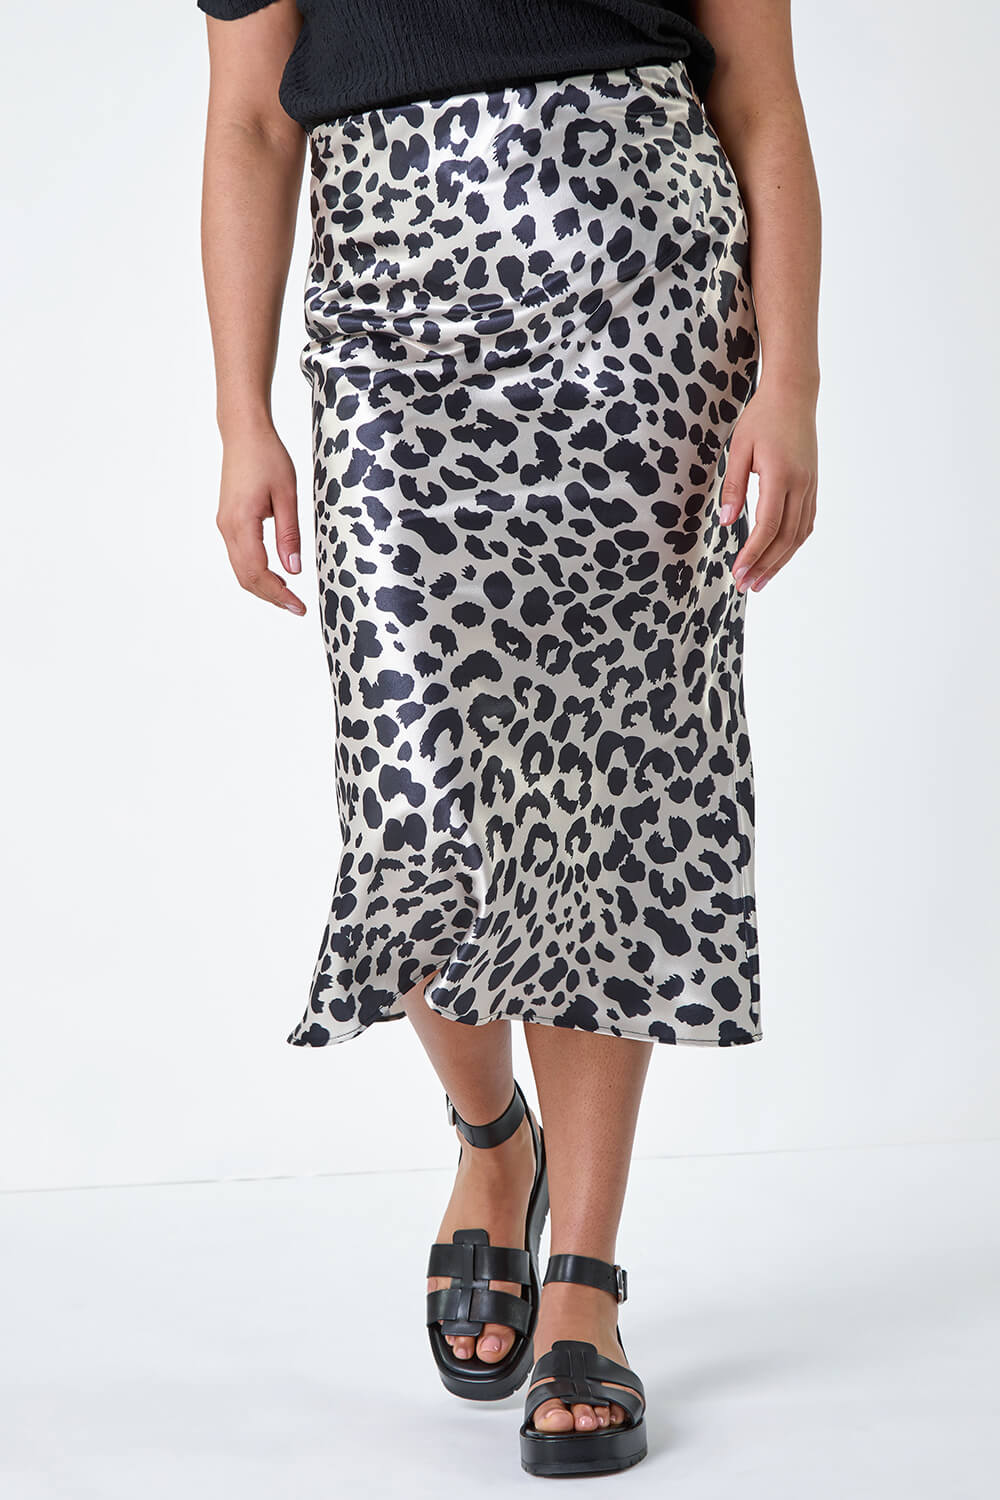 Black Curve Animal Print Satin Skirt, Image 4 of 5